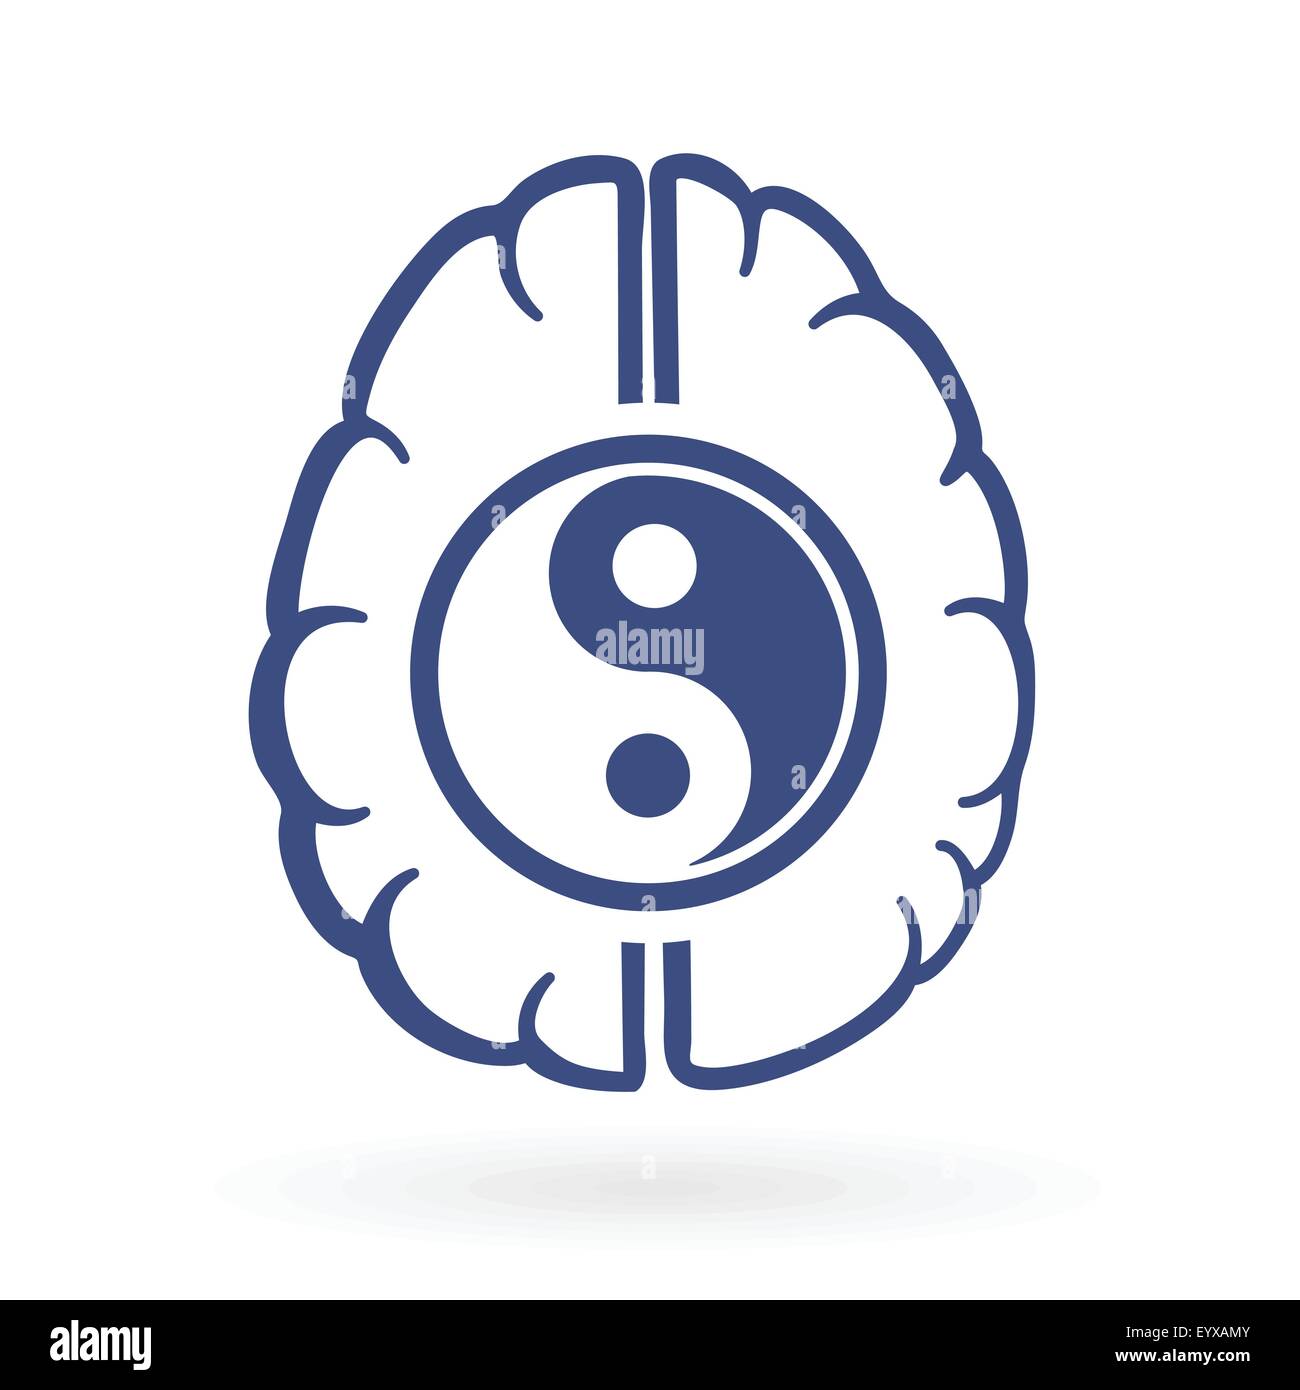 ying-yang and human brain symbols as positive energy life balance concept vector illustration. Stock Vector